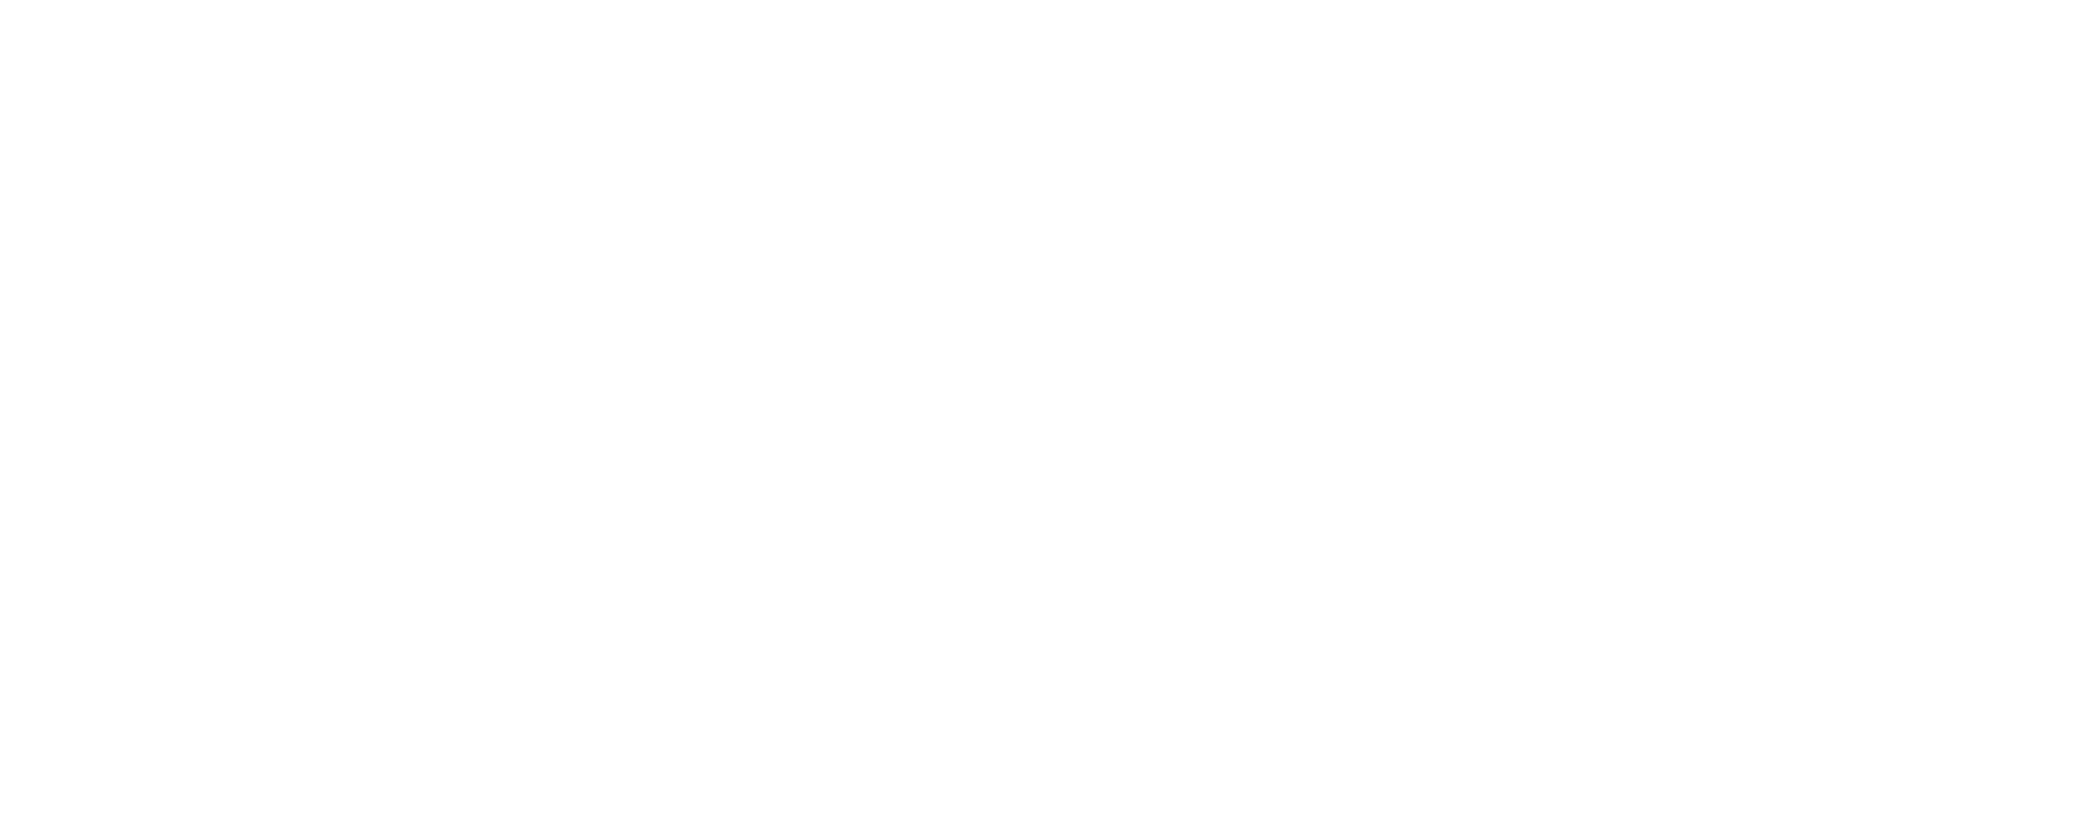 The JBH Digital PR logo.